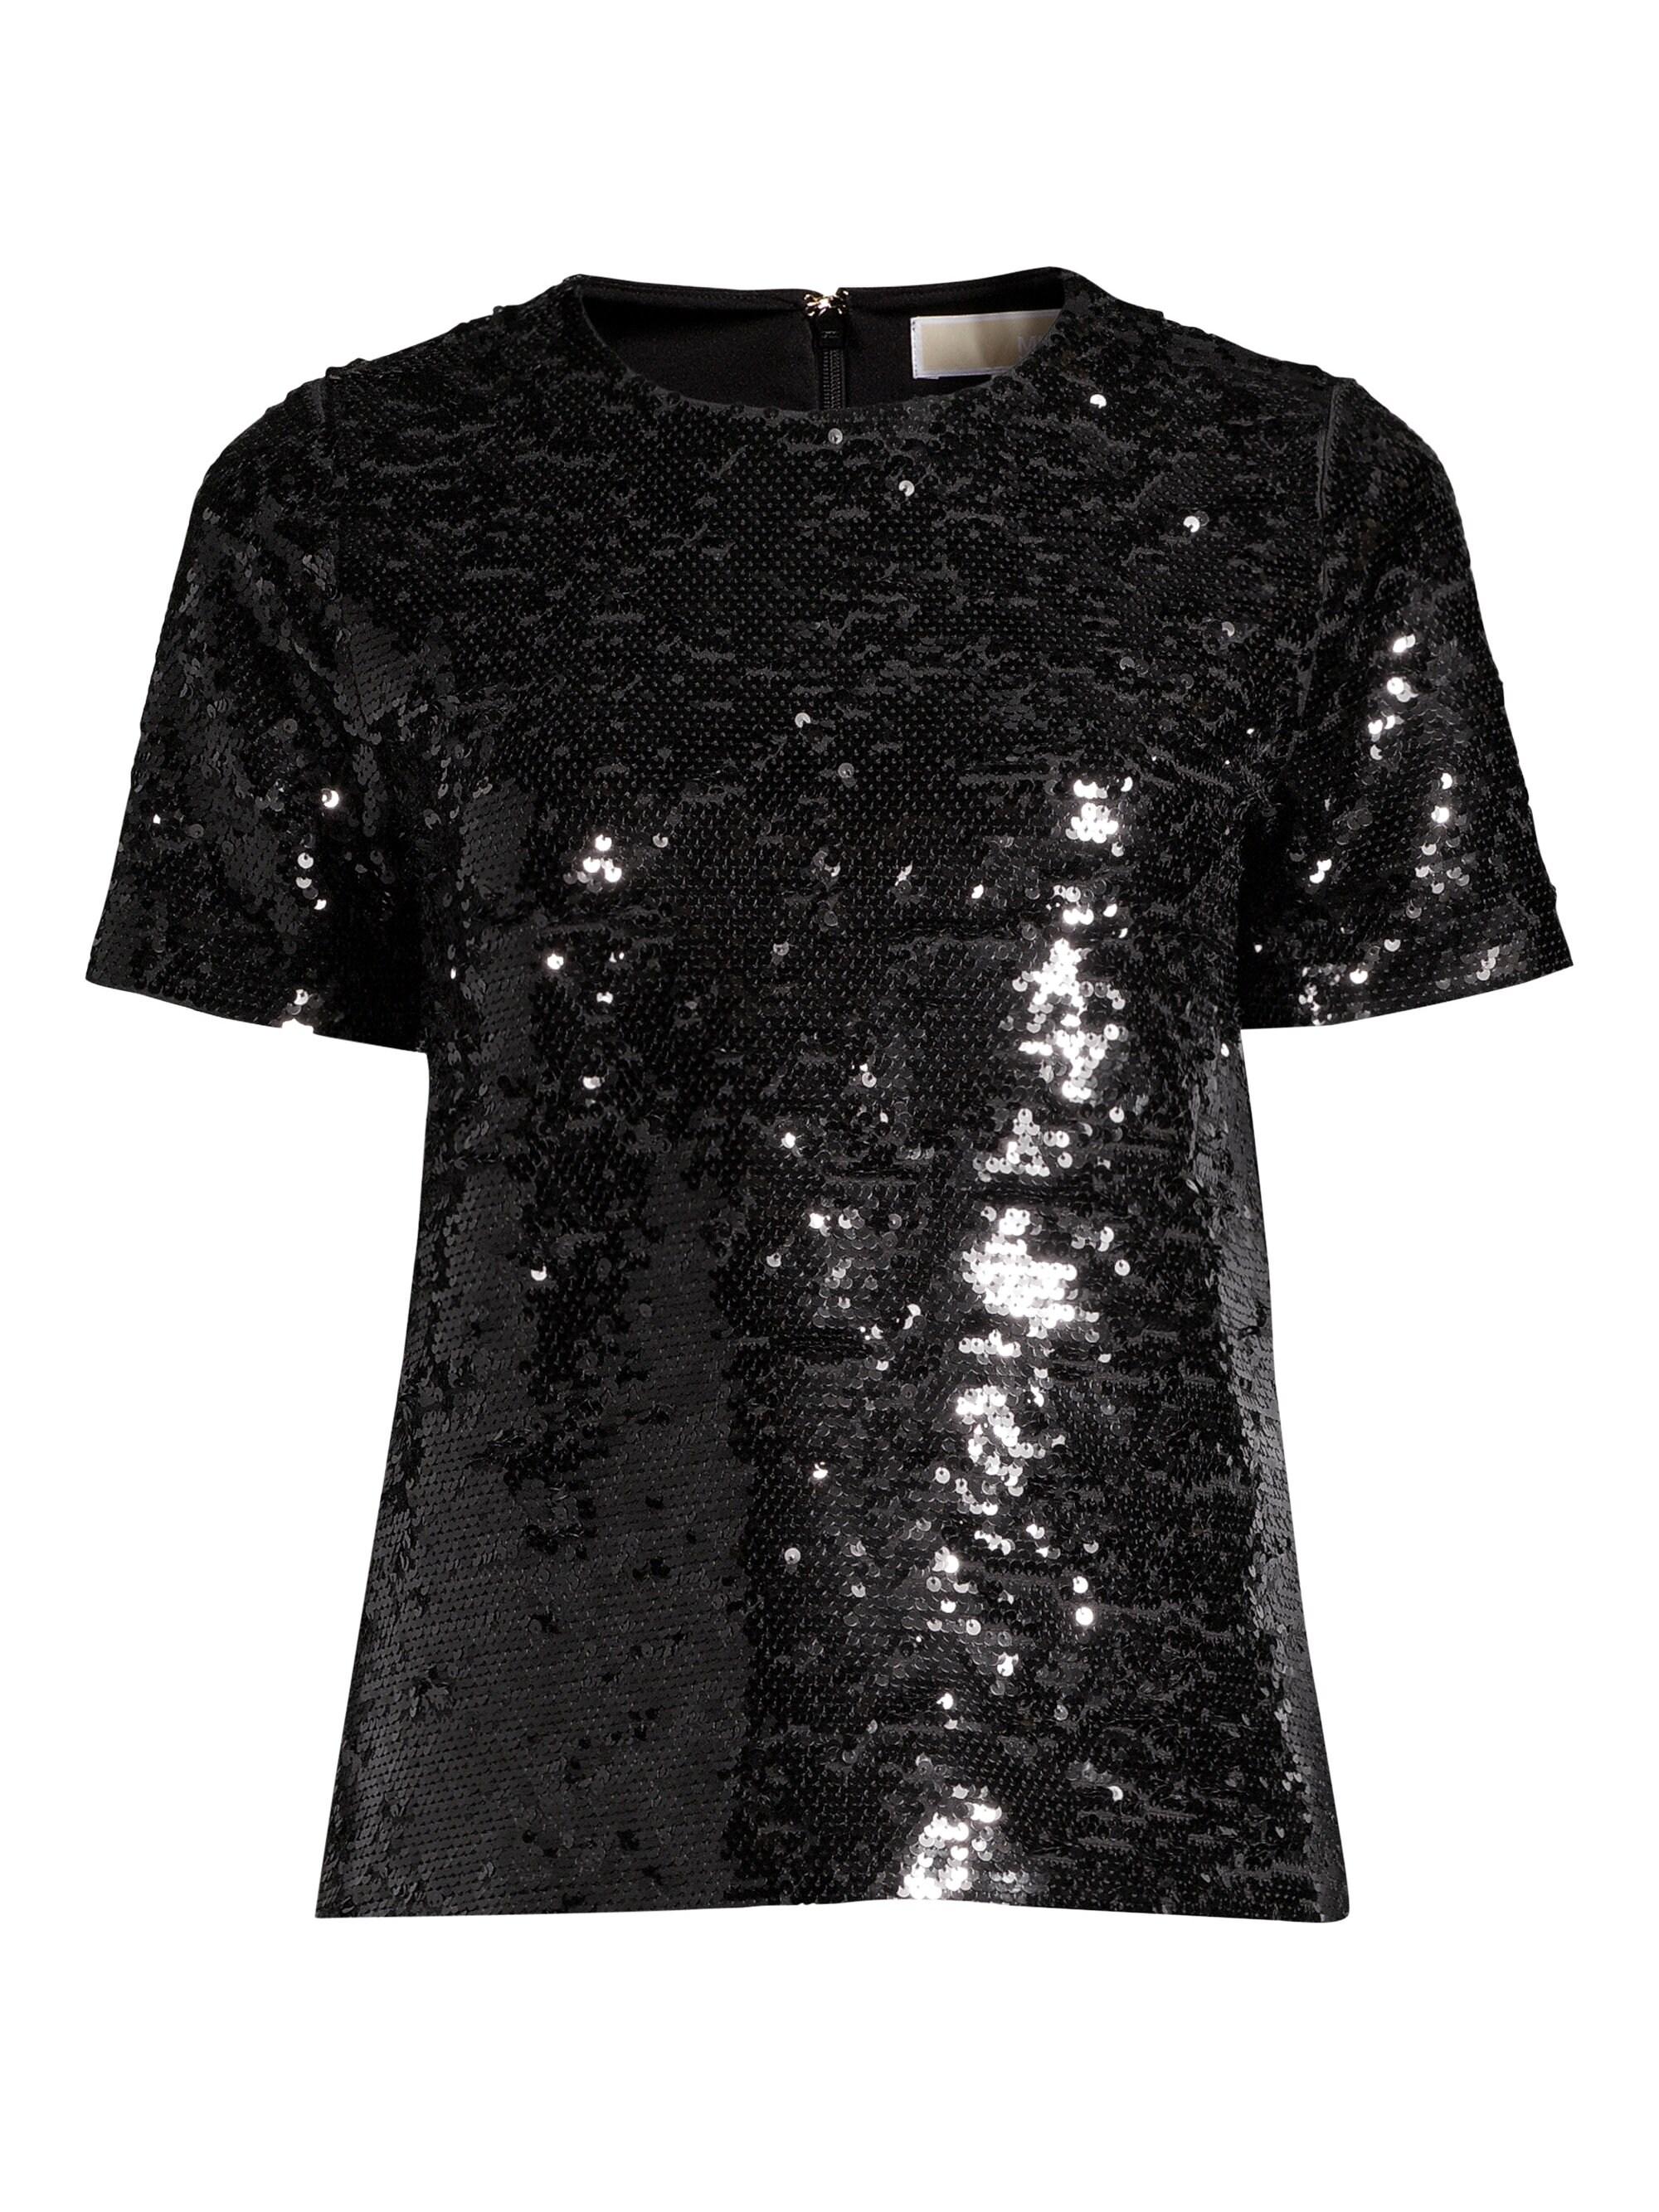 MICHAEL Michael Kors Sequin T Shirt in Black - Lyst